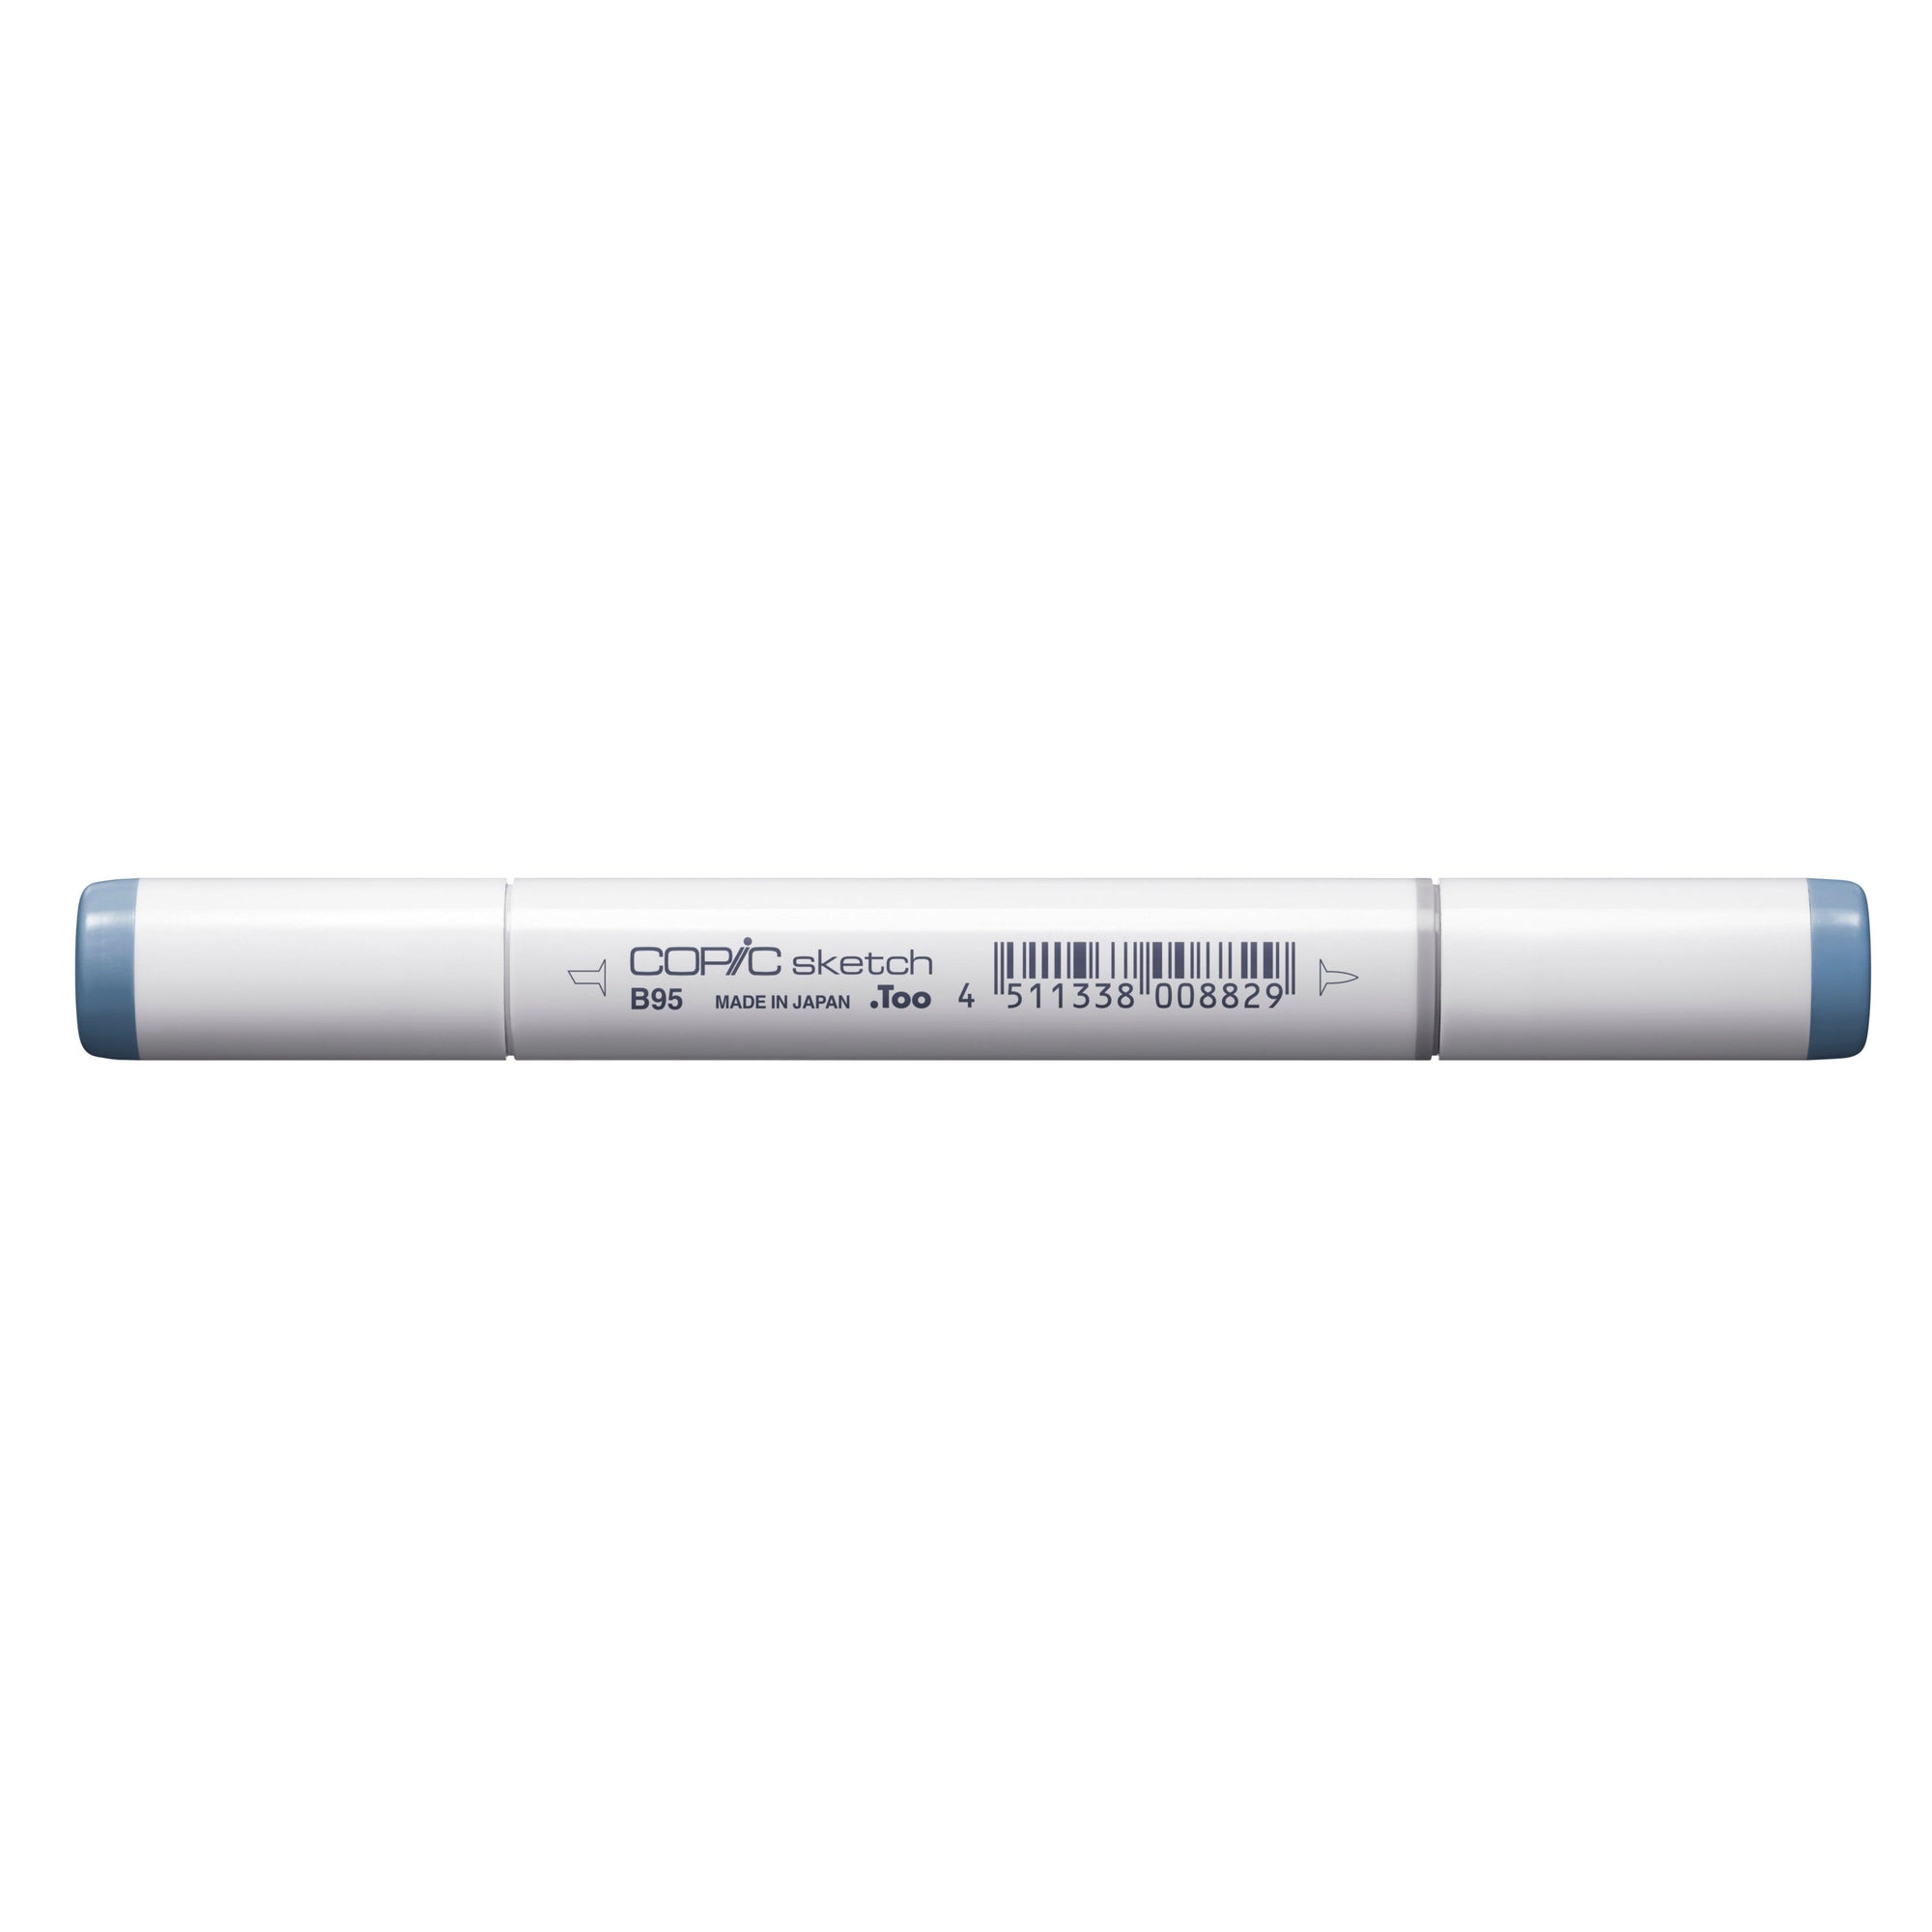 Copic - Sketch Marker - Light Grayish Cobalt - B95-ScrapbookPal